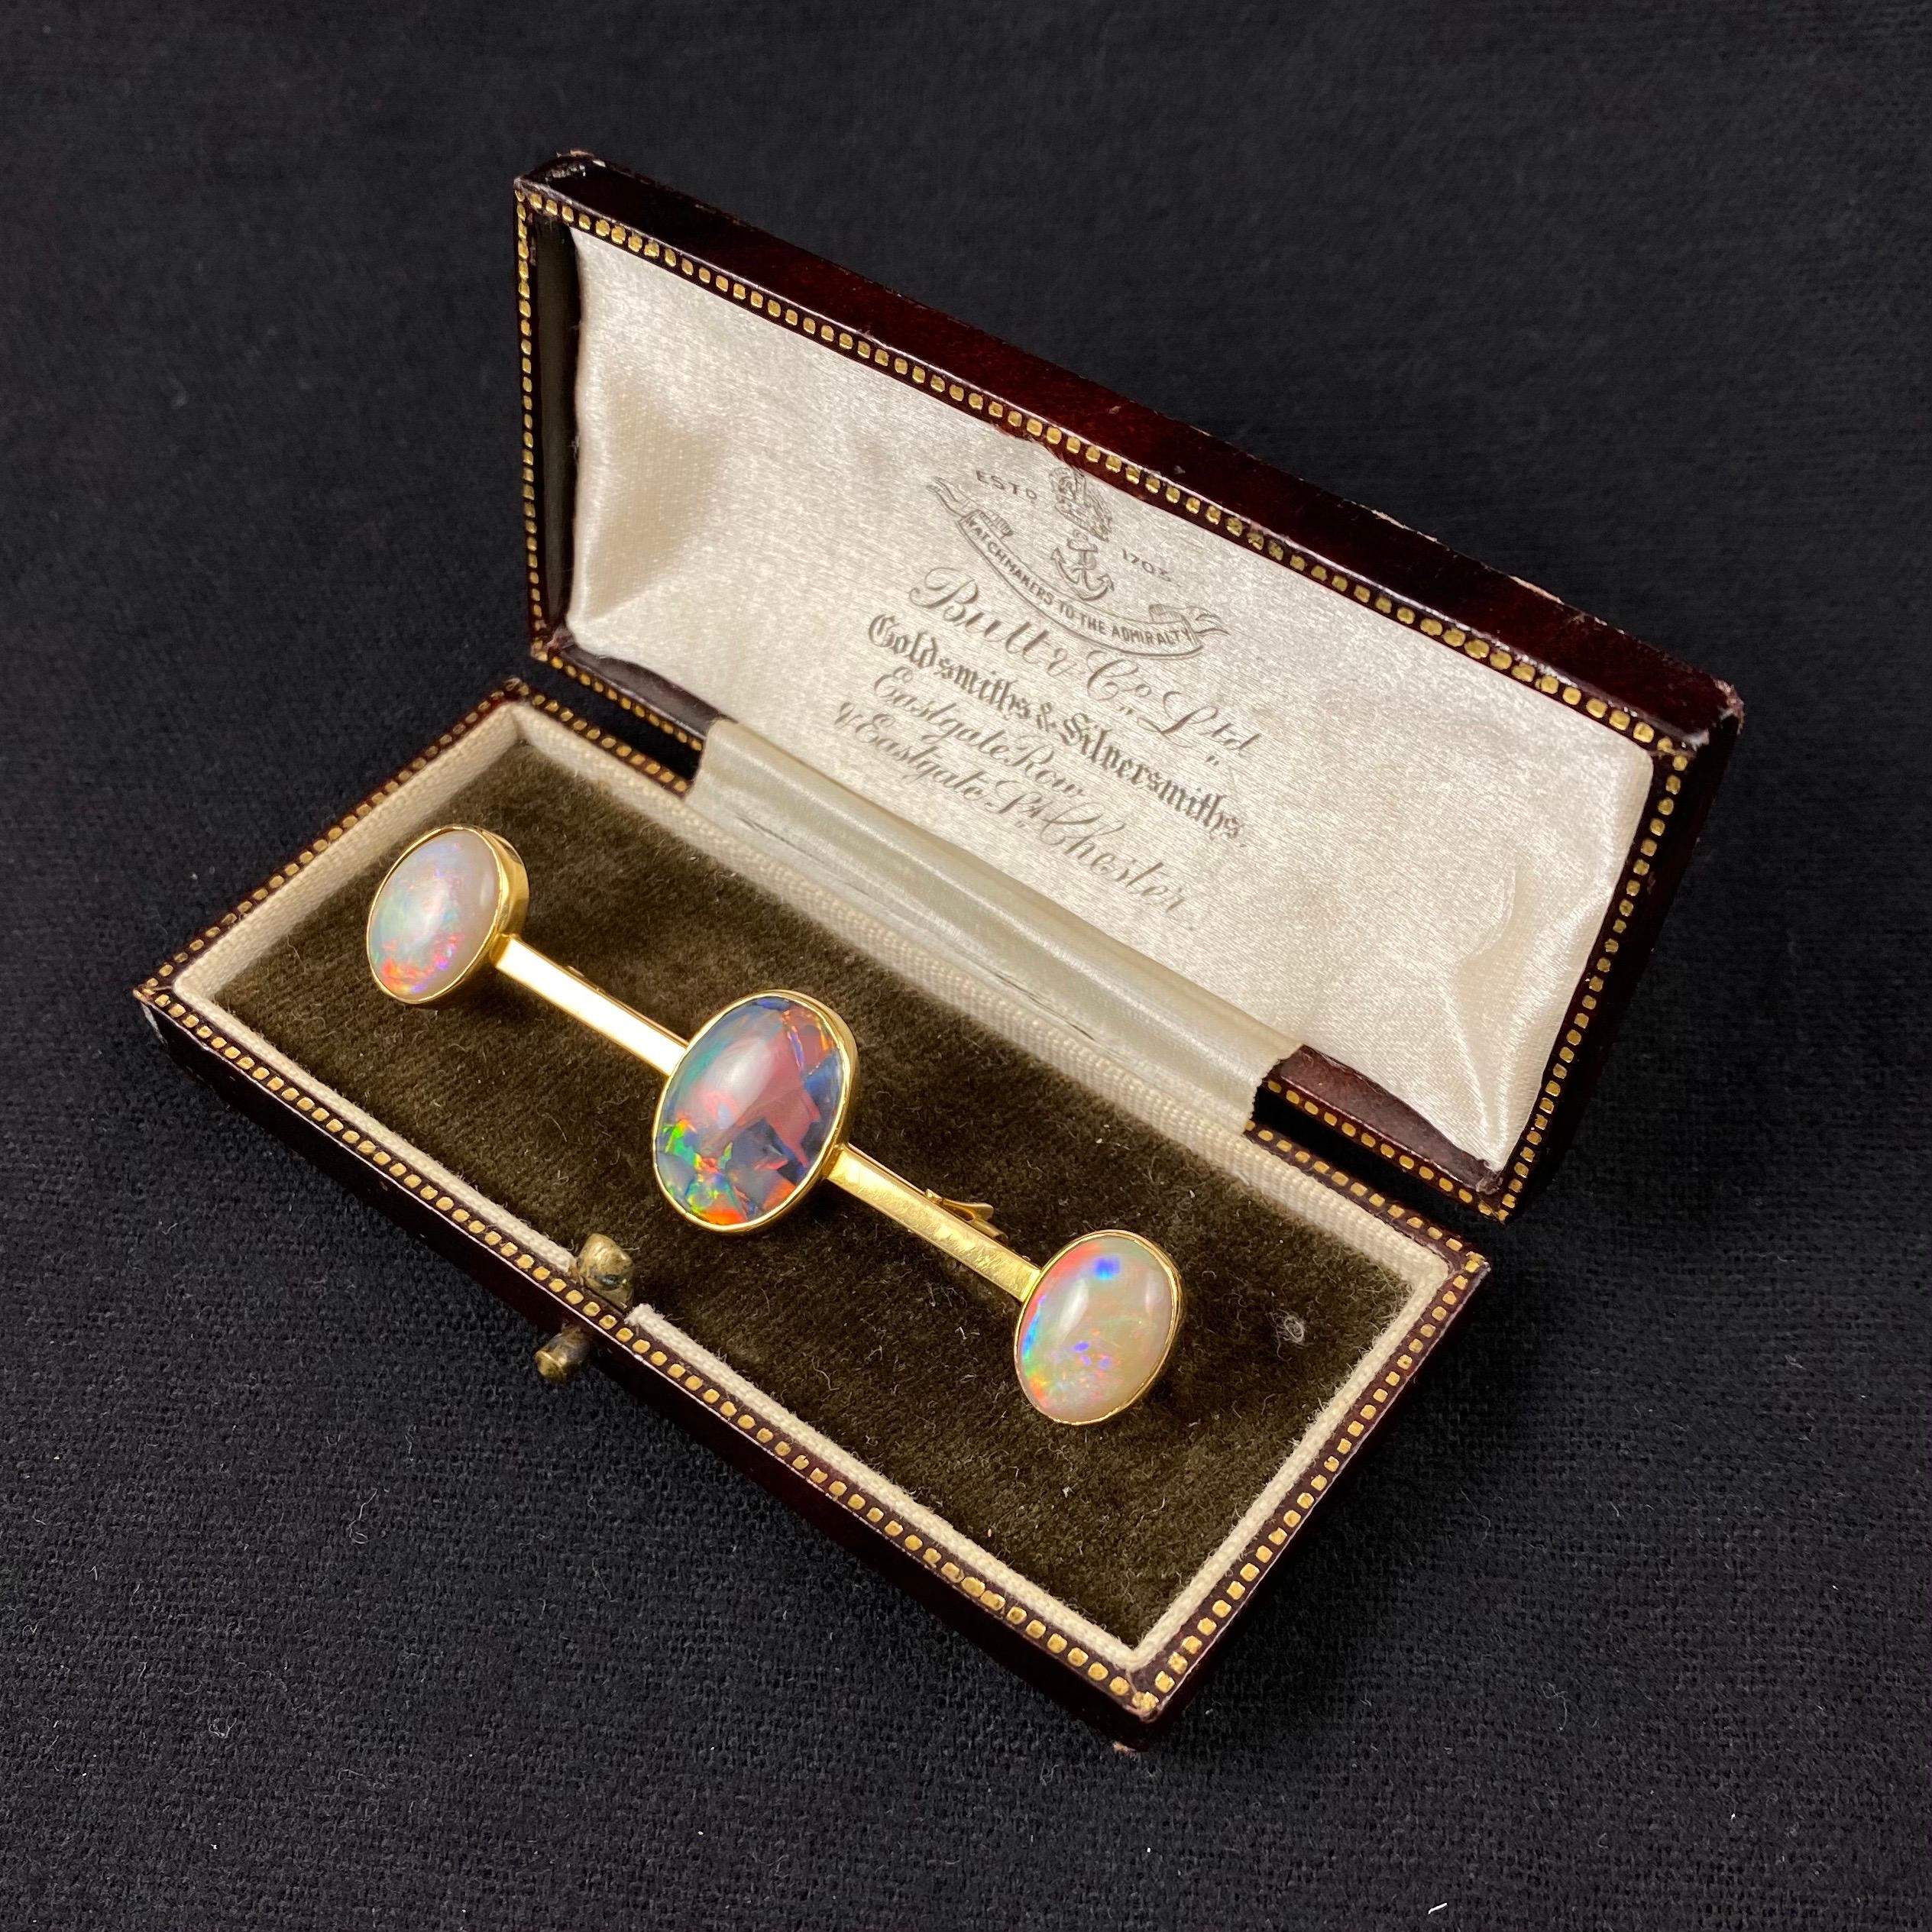 Oval Cut Antique Edwardian 5 Carat Australian Black Opal Brooch Pendant Yellow Gold 1900s For Sale